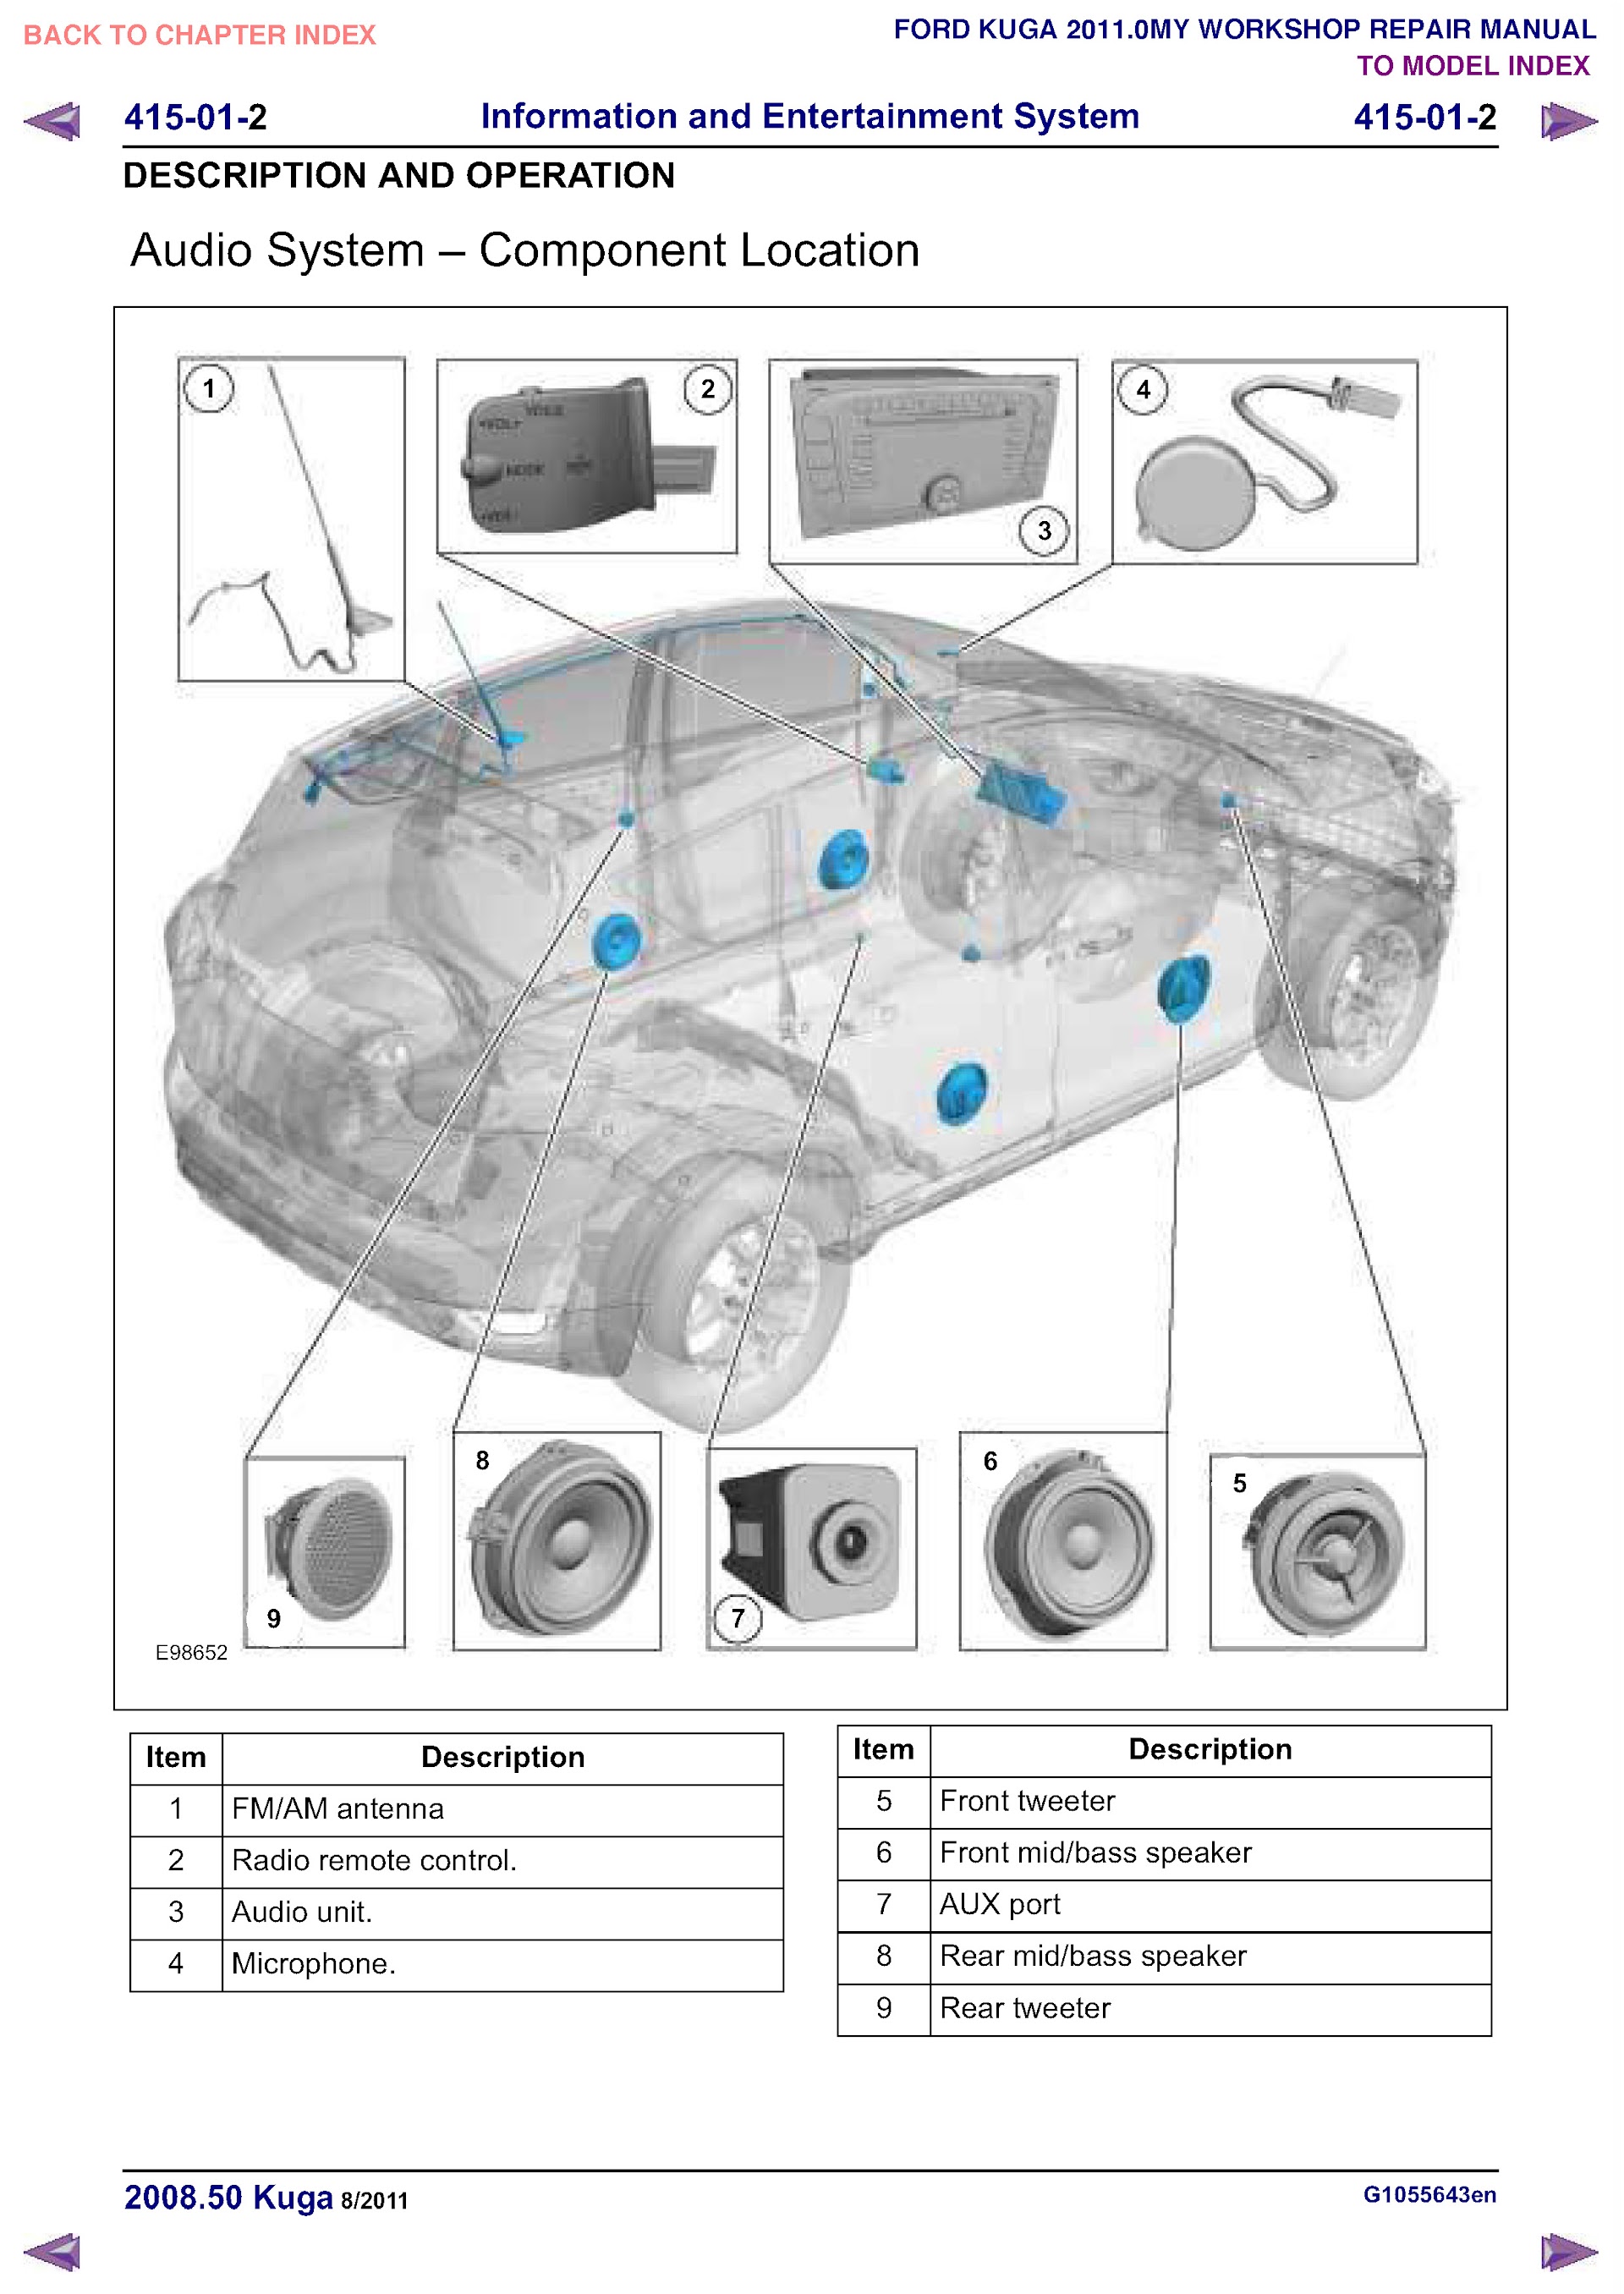 2014 Ford Kuga Repair Manual Information and Entertainment System 